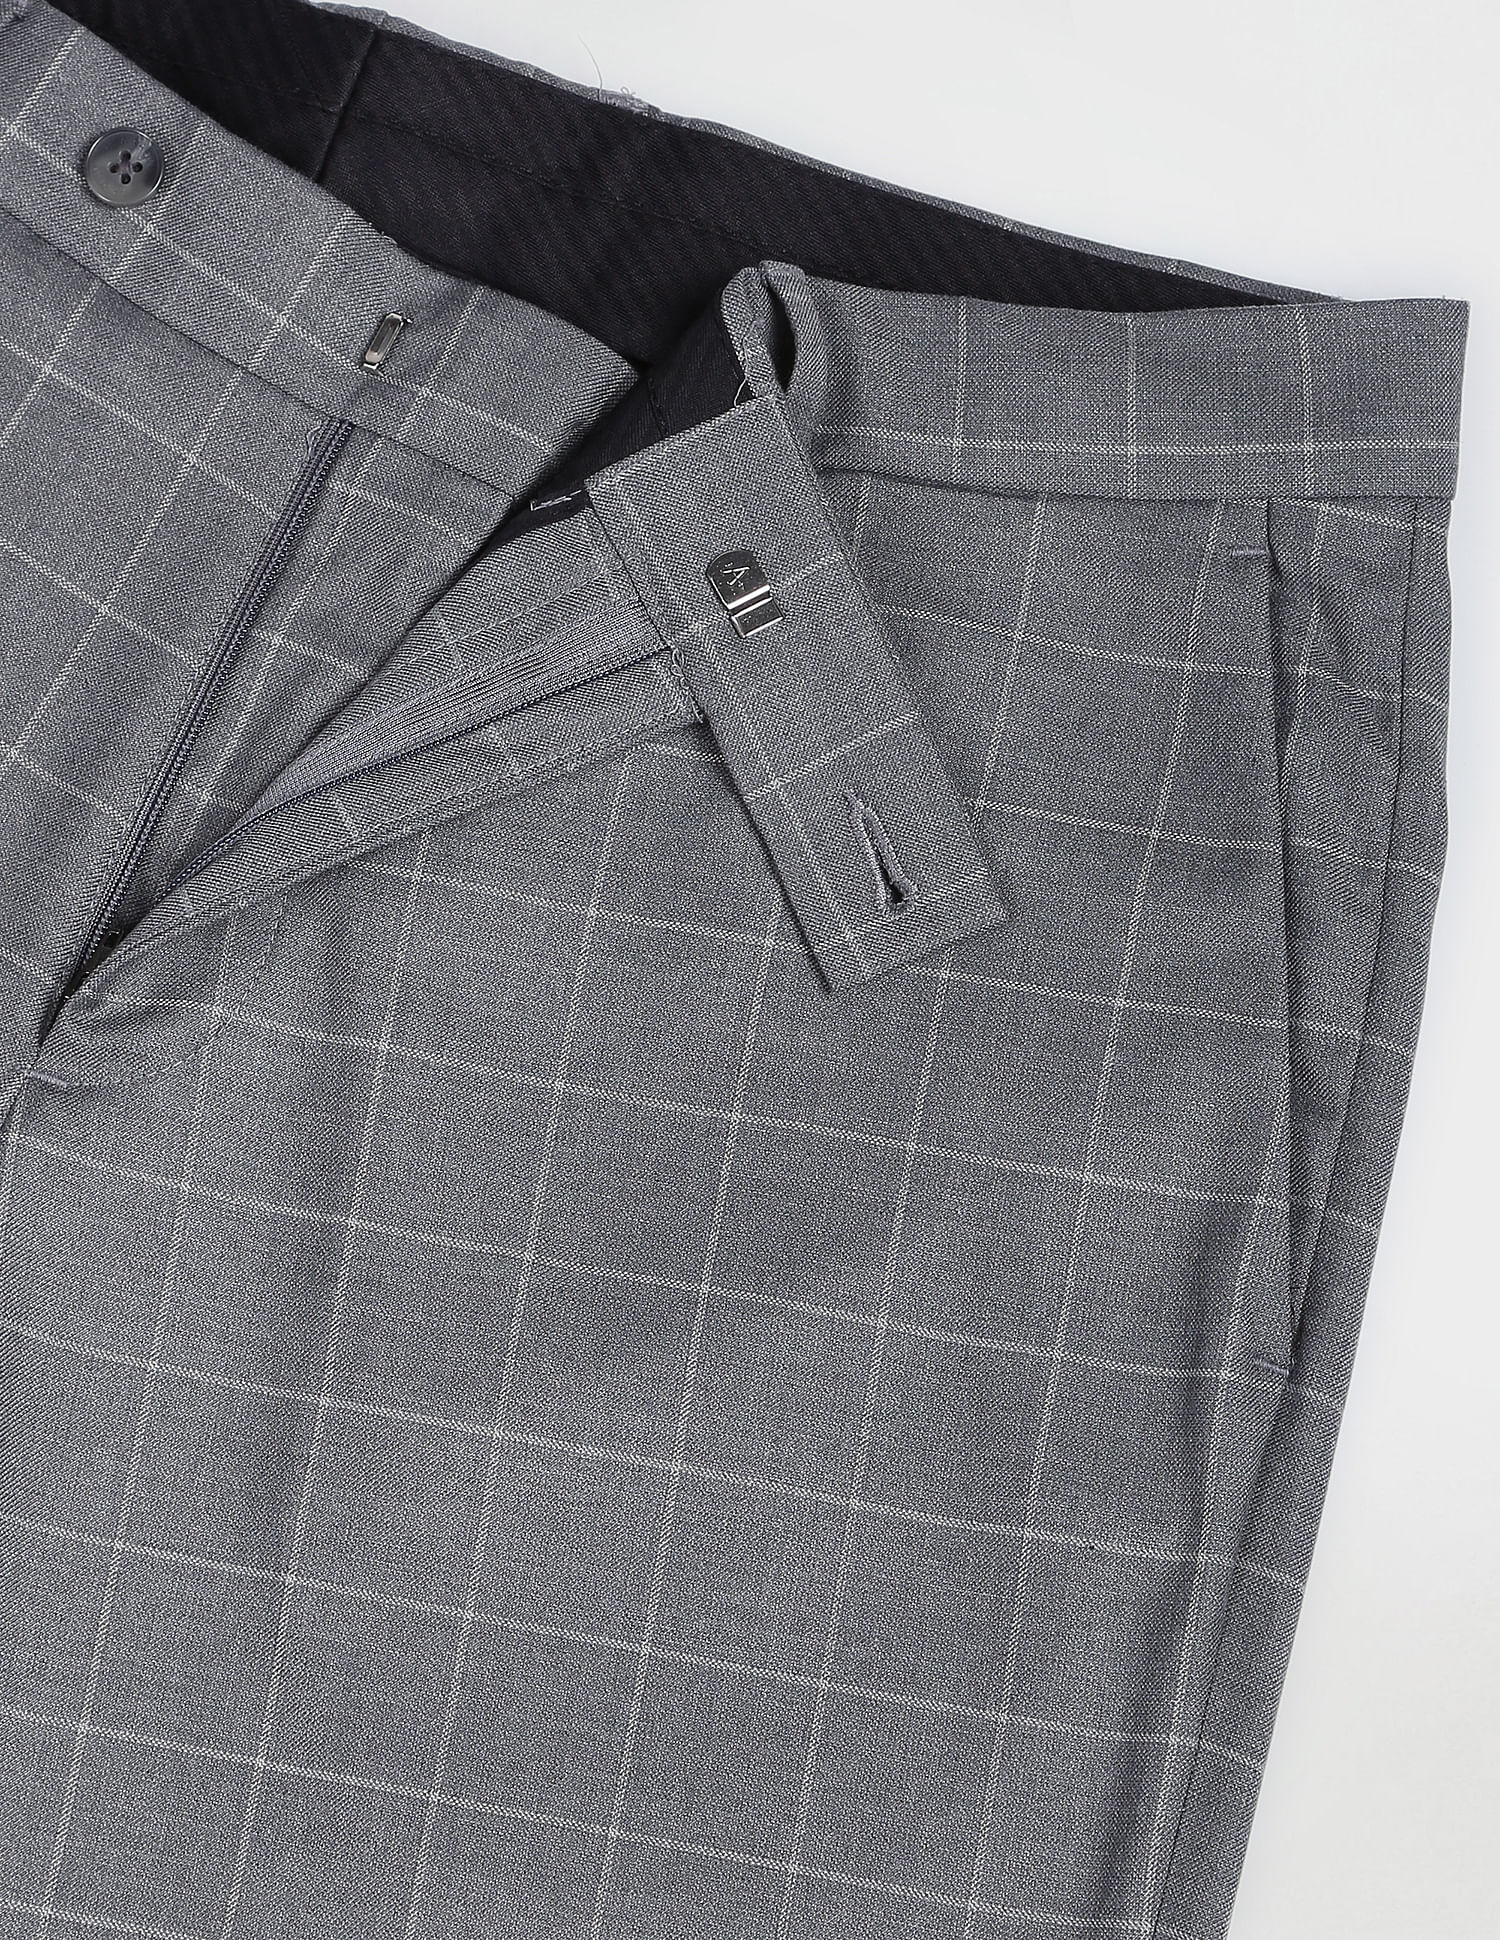 Windowpane Check Smart Flex Formal Trousers